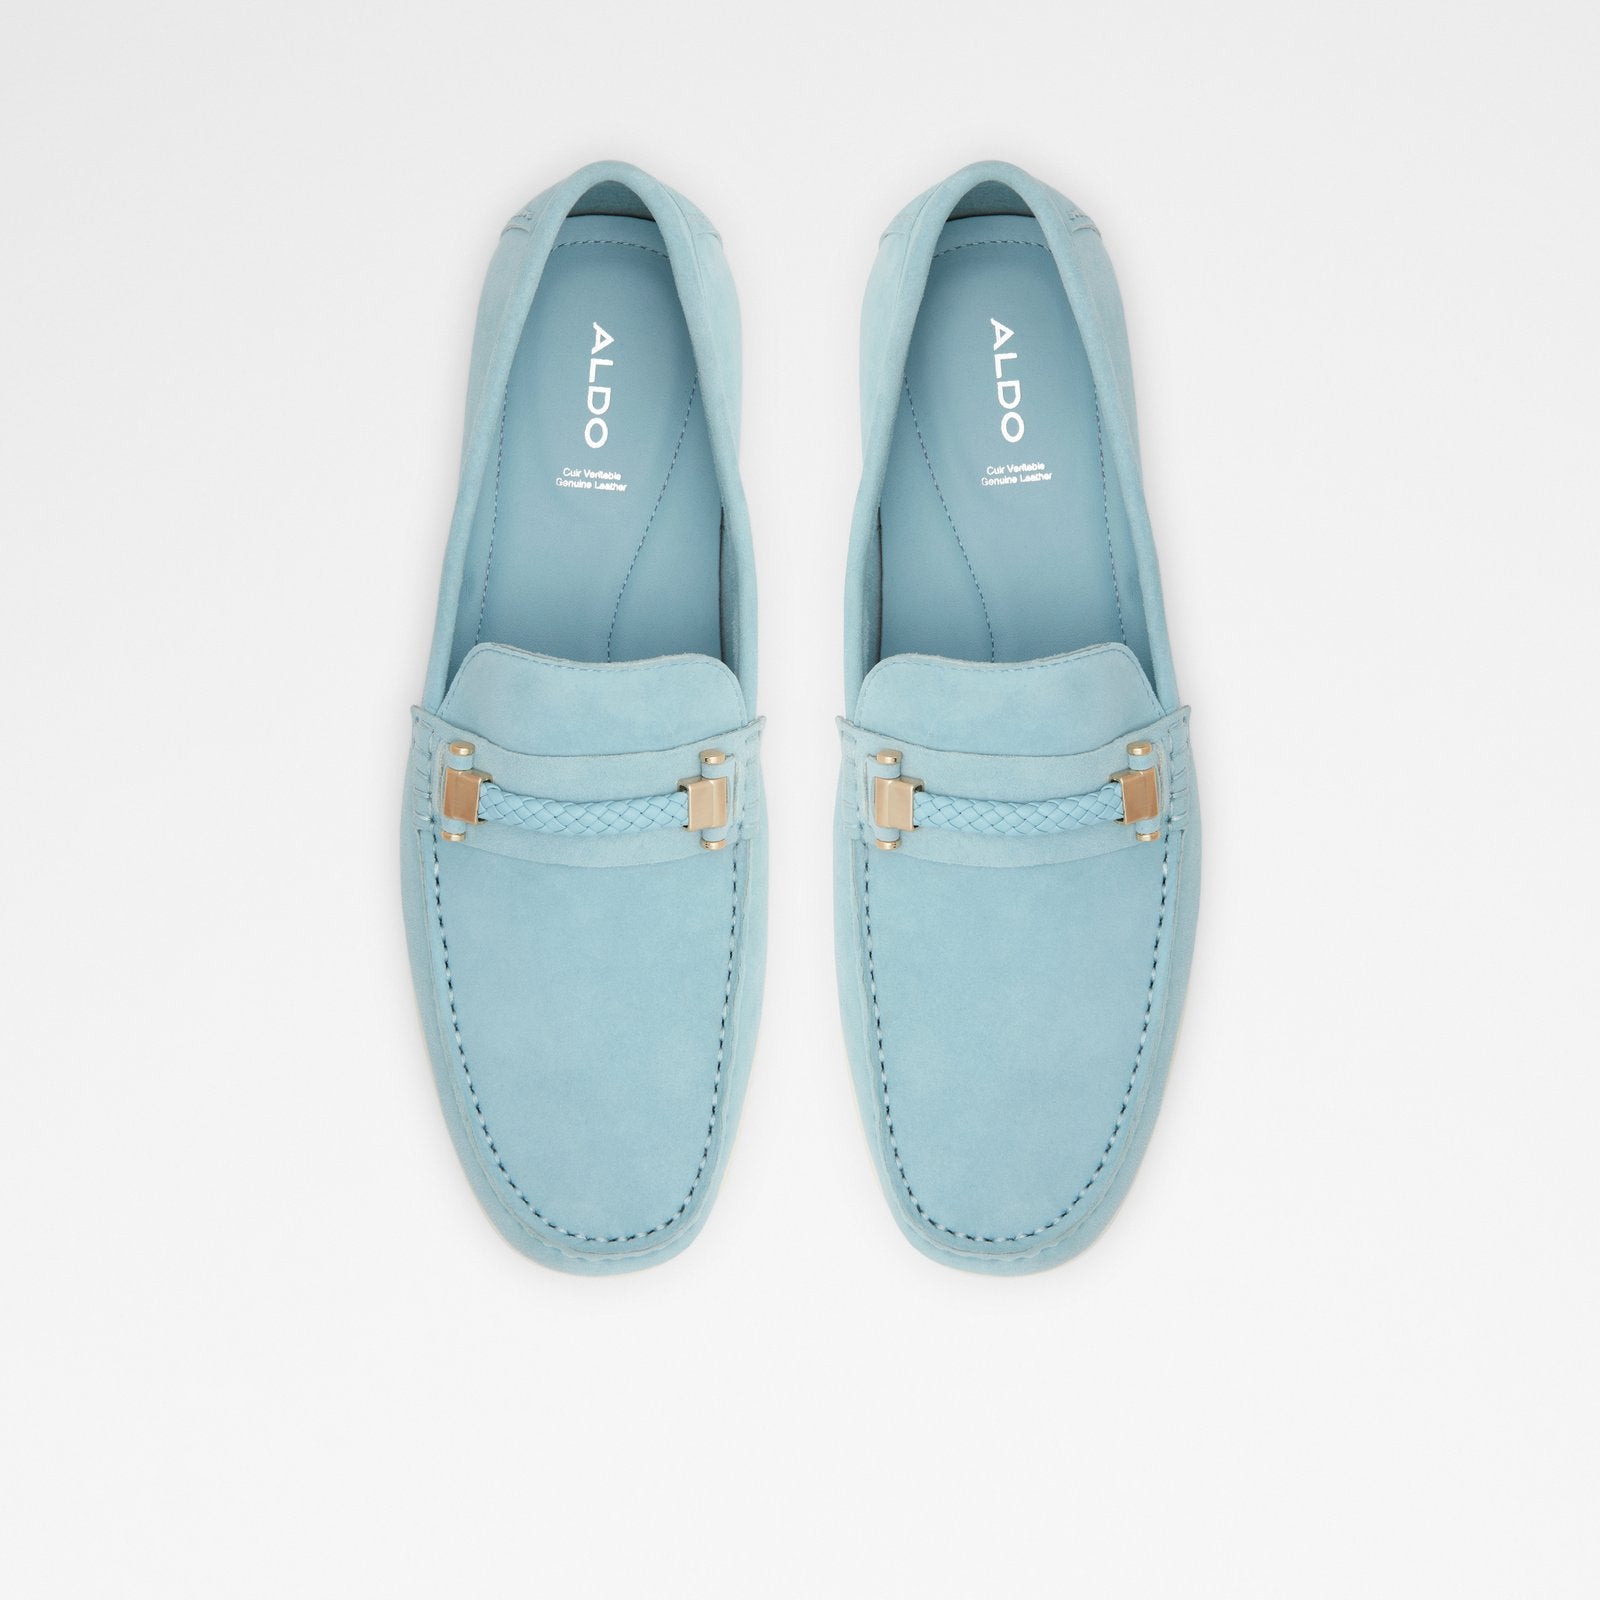 Zirnuflex Men Shoes - Blue - ALDO KSA